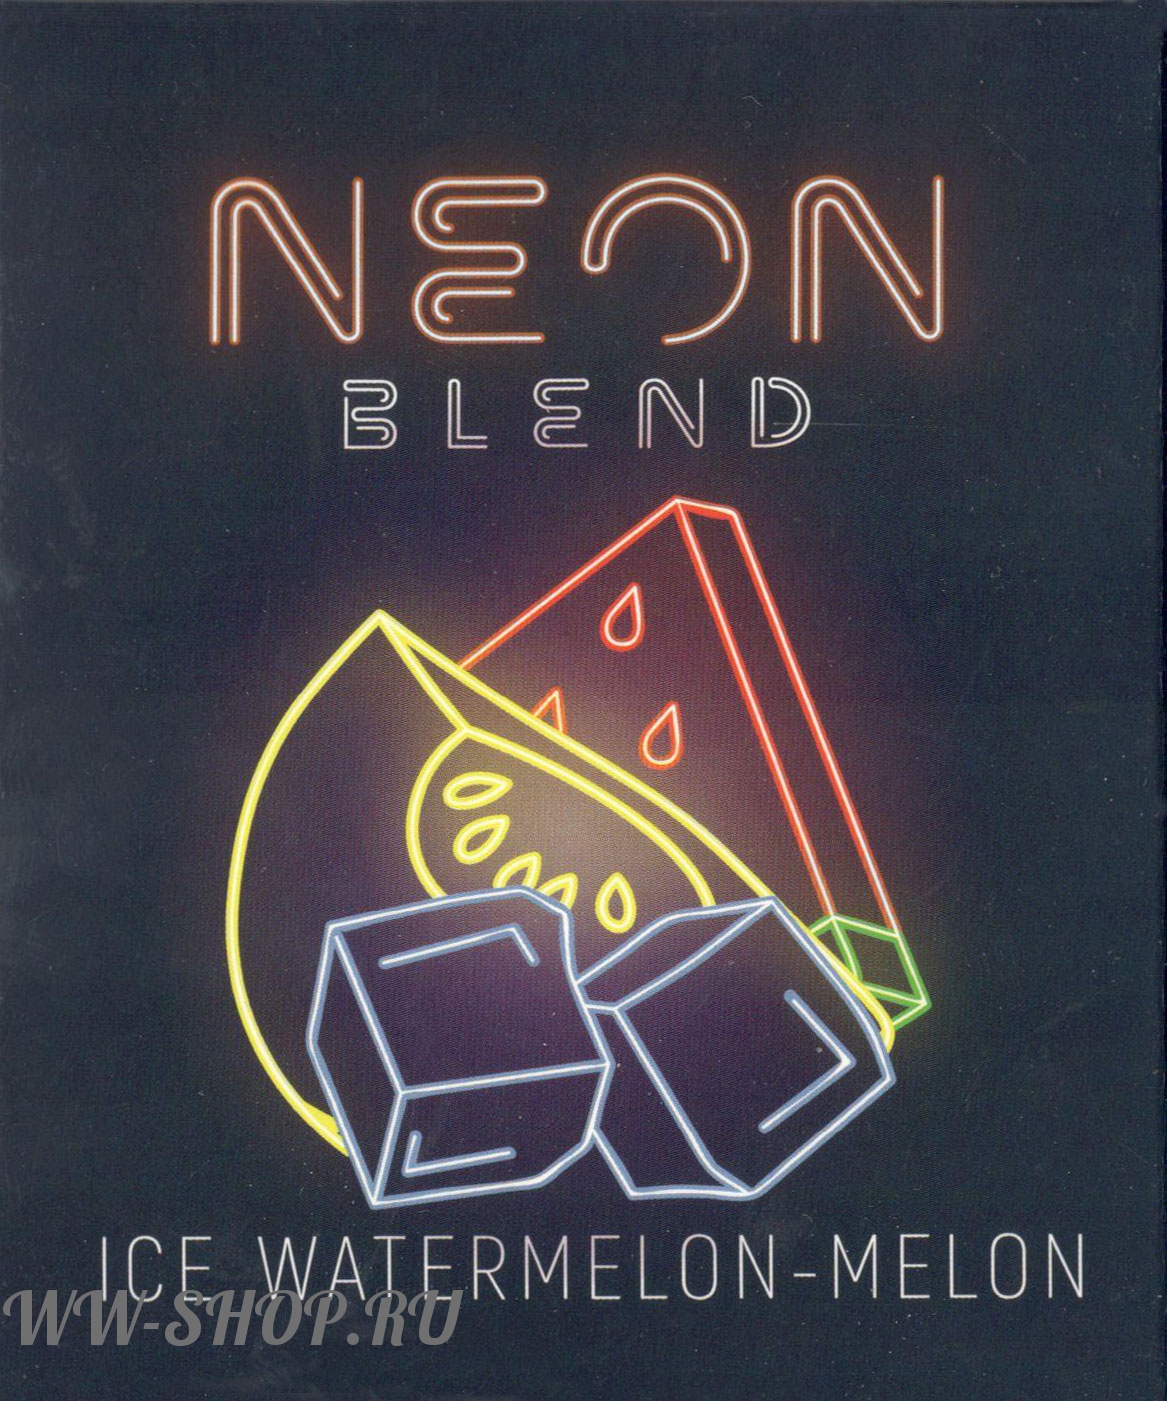 neon- ледяные арбуз и дыня (ice watermelon melon) Тамбов